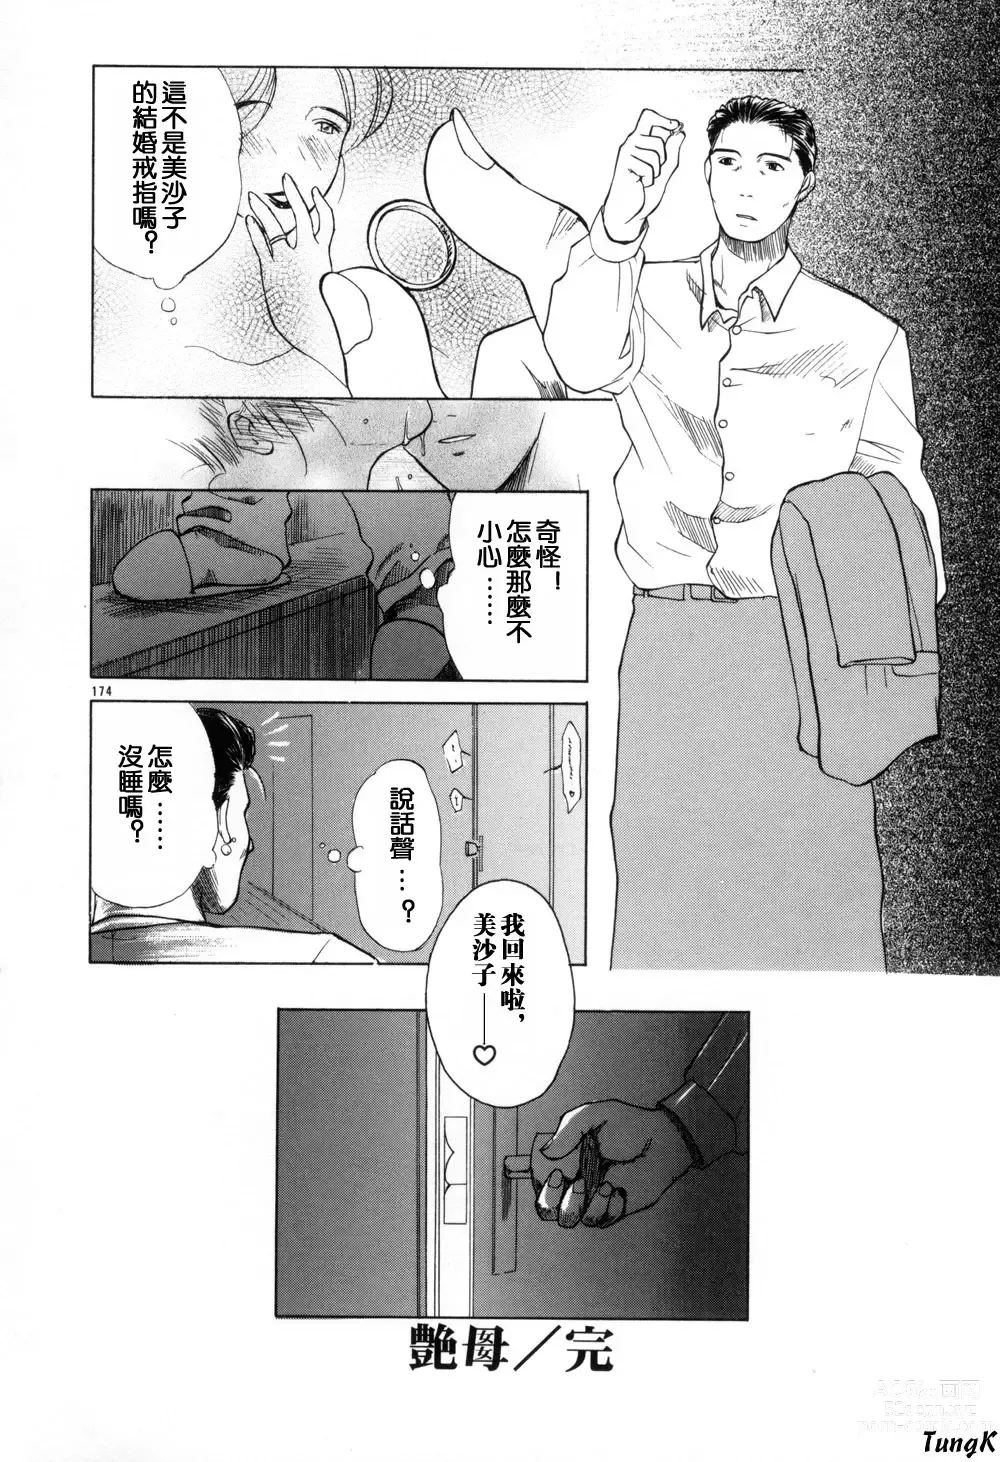 Page 174 of manga Zoku Enbo -Futari-